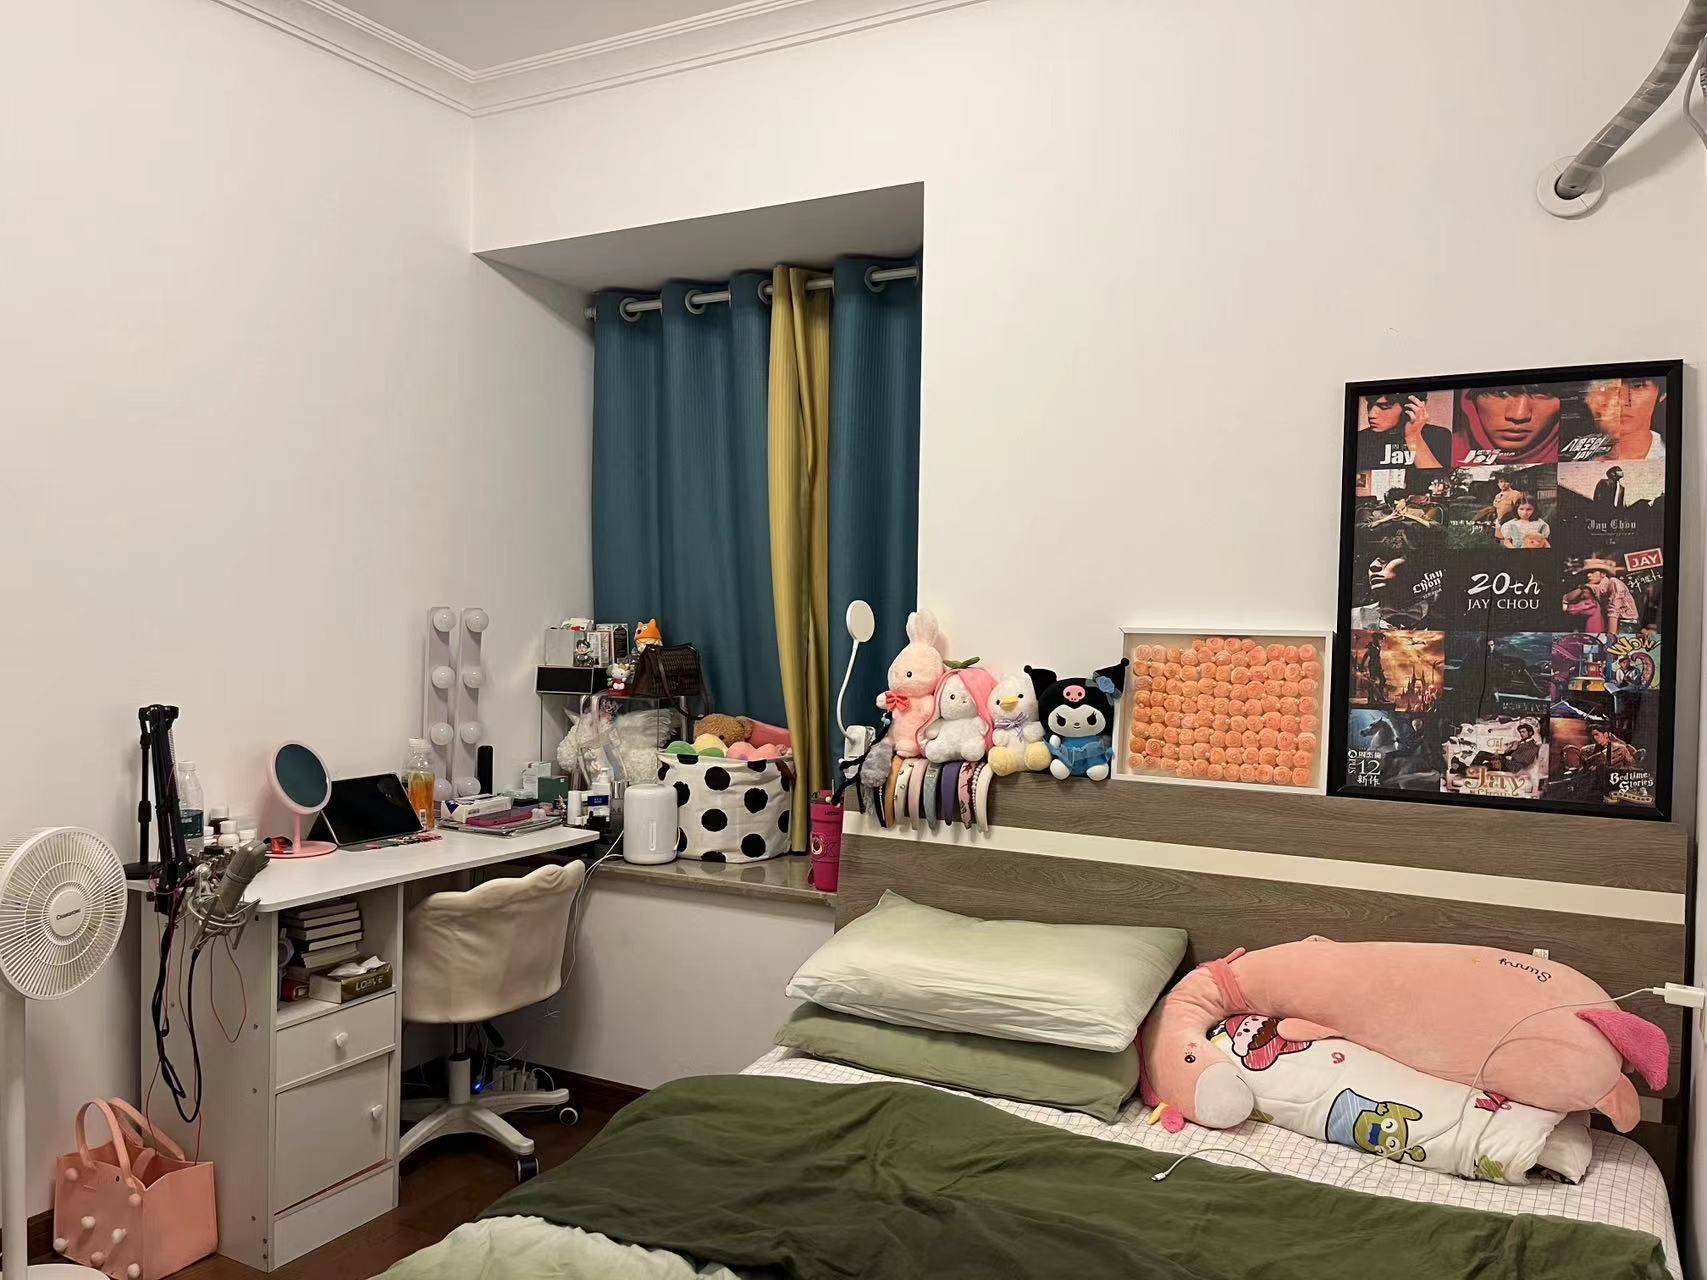 Wuhan-Hongshan-Cozy Home,Clean&Comfy,No Gender Limit